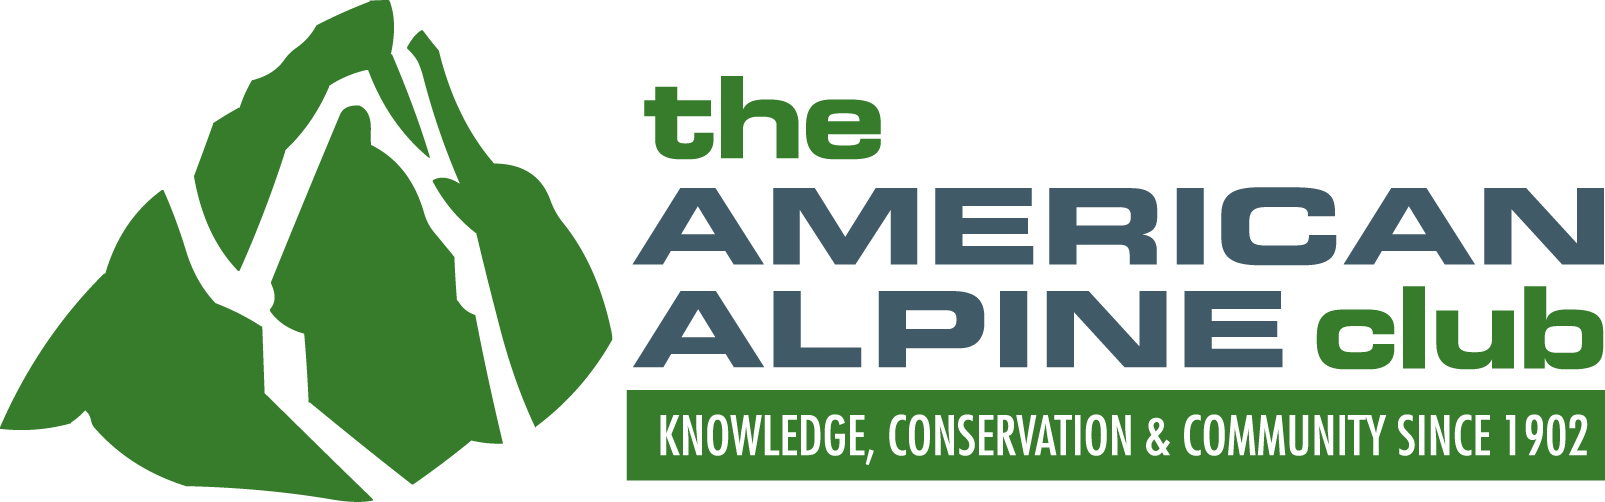 The American Alpine Club 